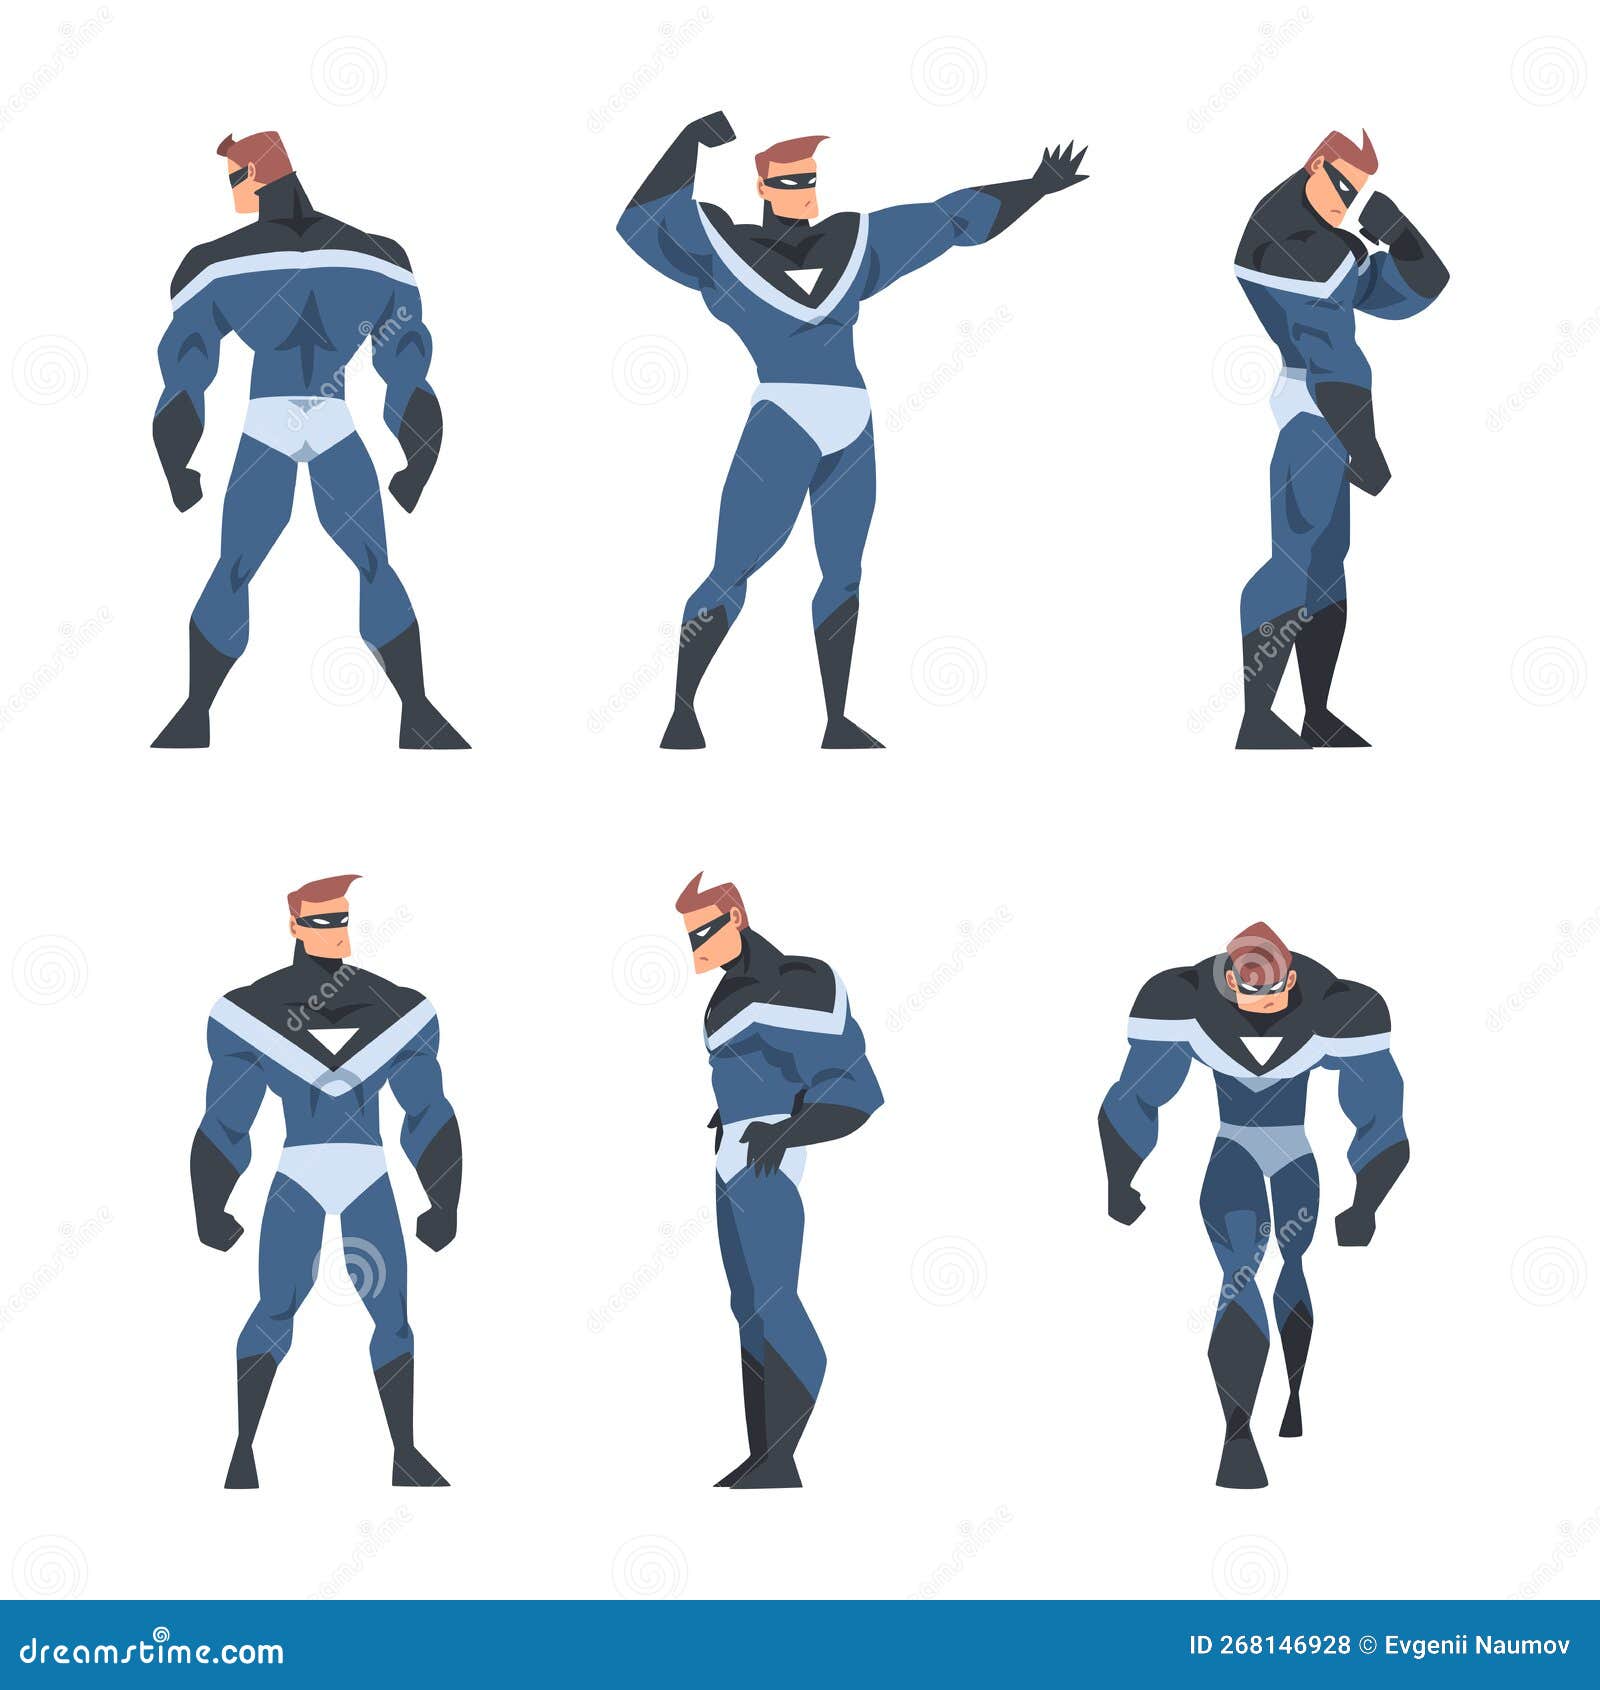 Epic Hero Poses for Genesis 3 Male(s) | Daz 3D